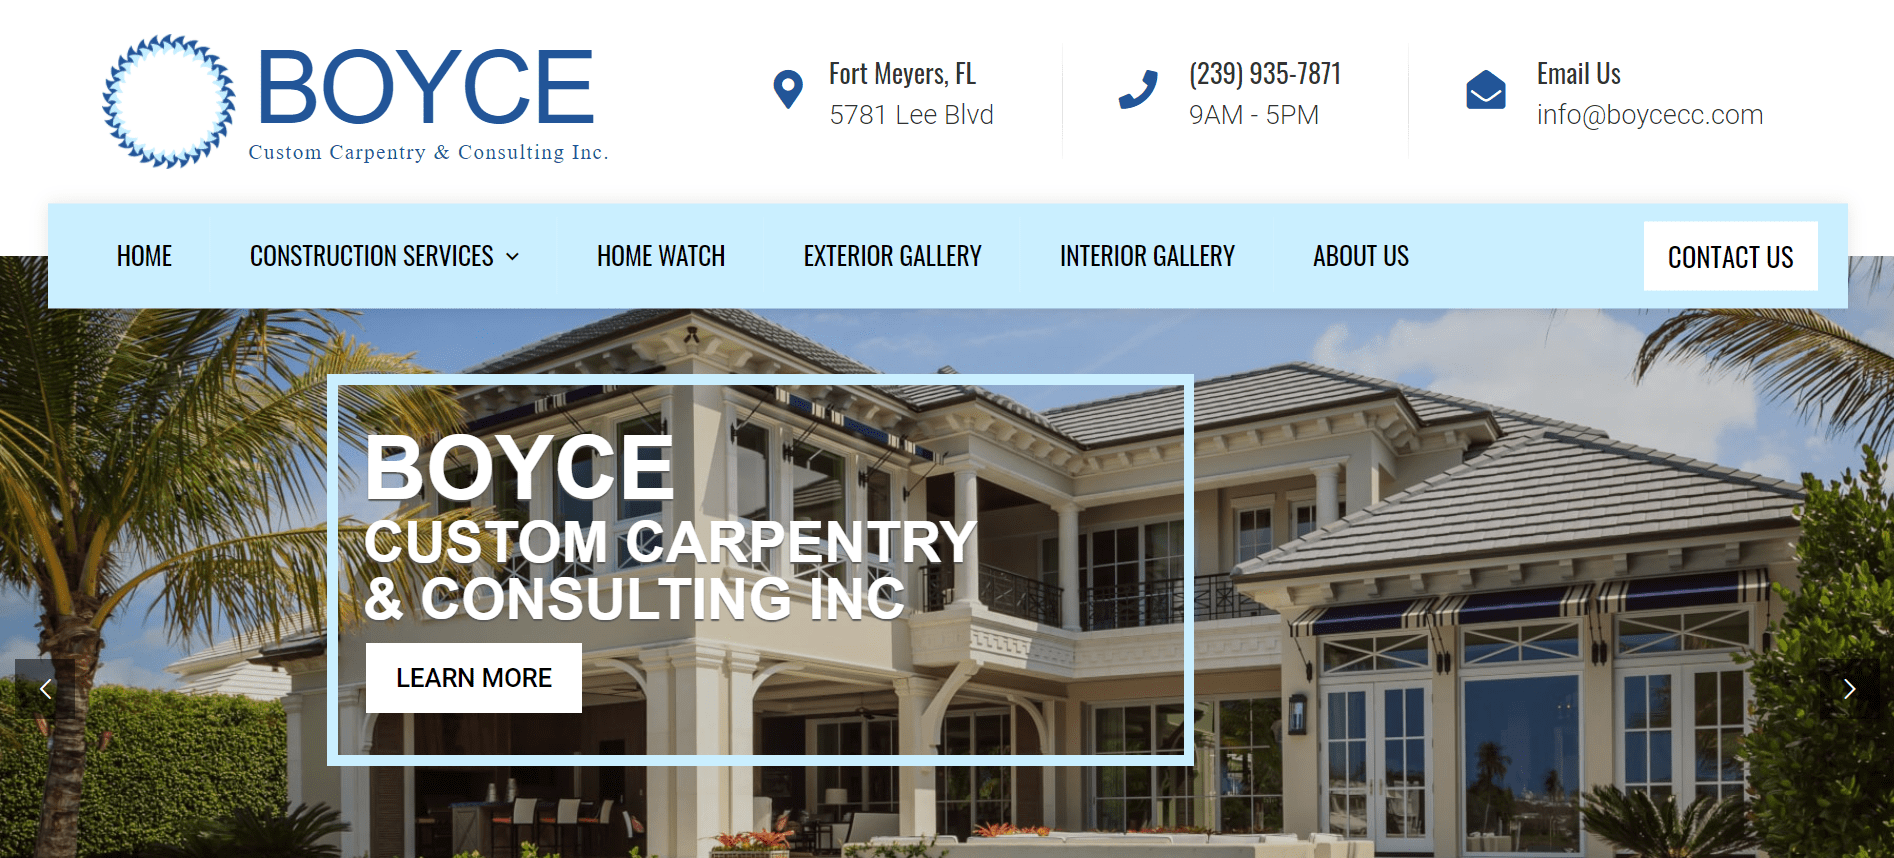 Boyce Custom Carpentry & Consulting Inc homepage image